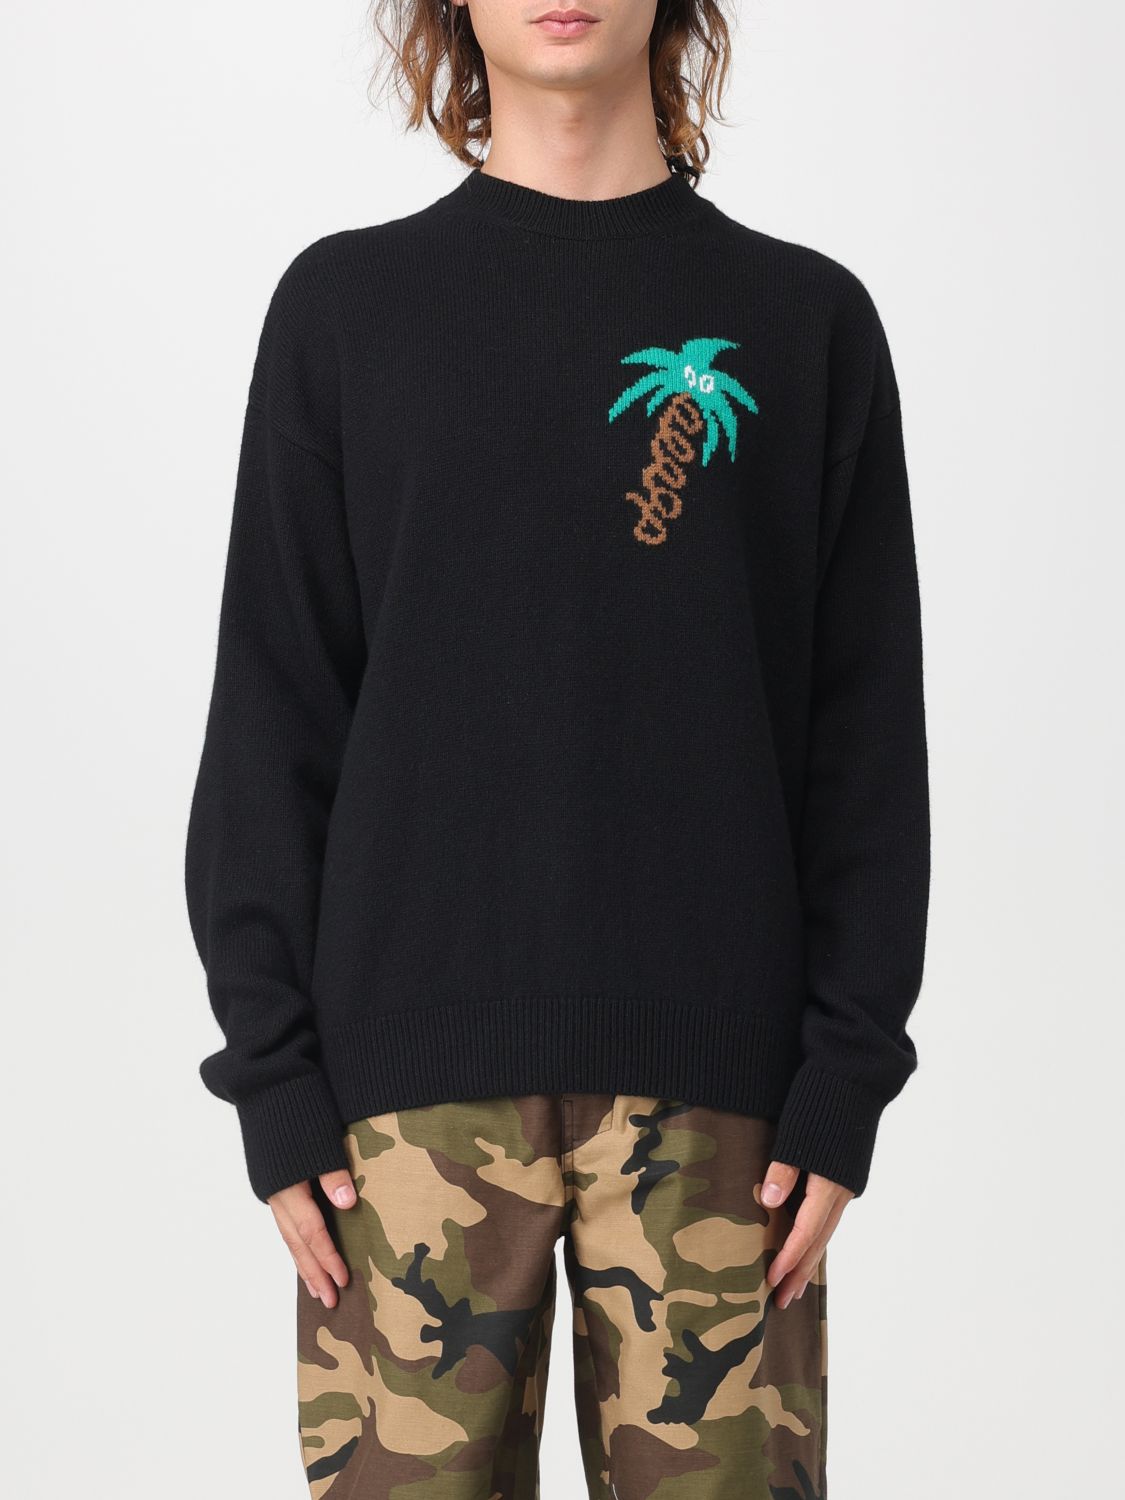 Palm Angels Sweater  Men Color Black